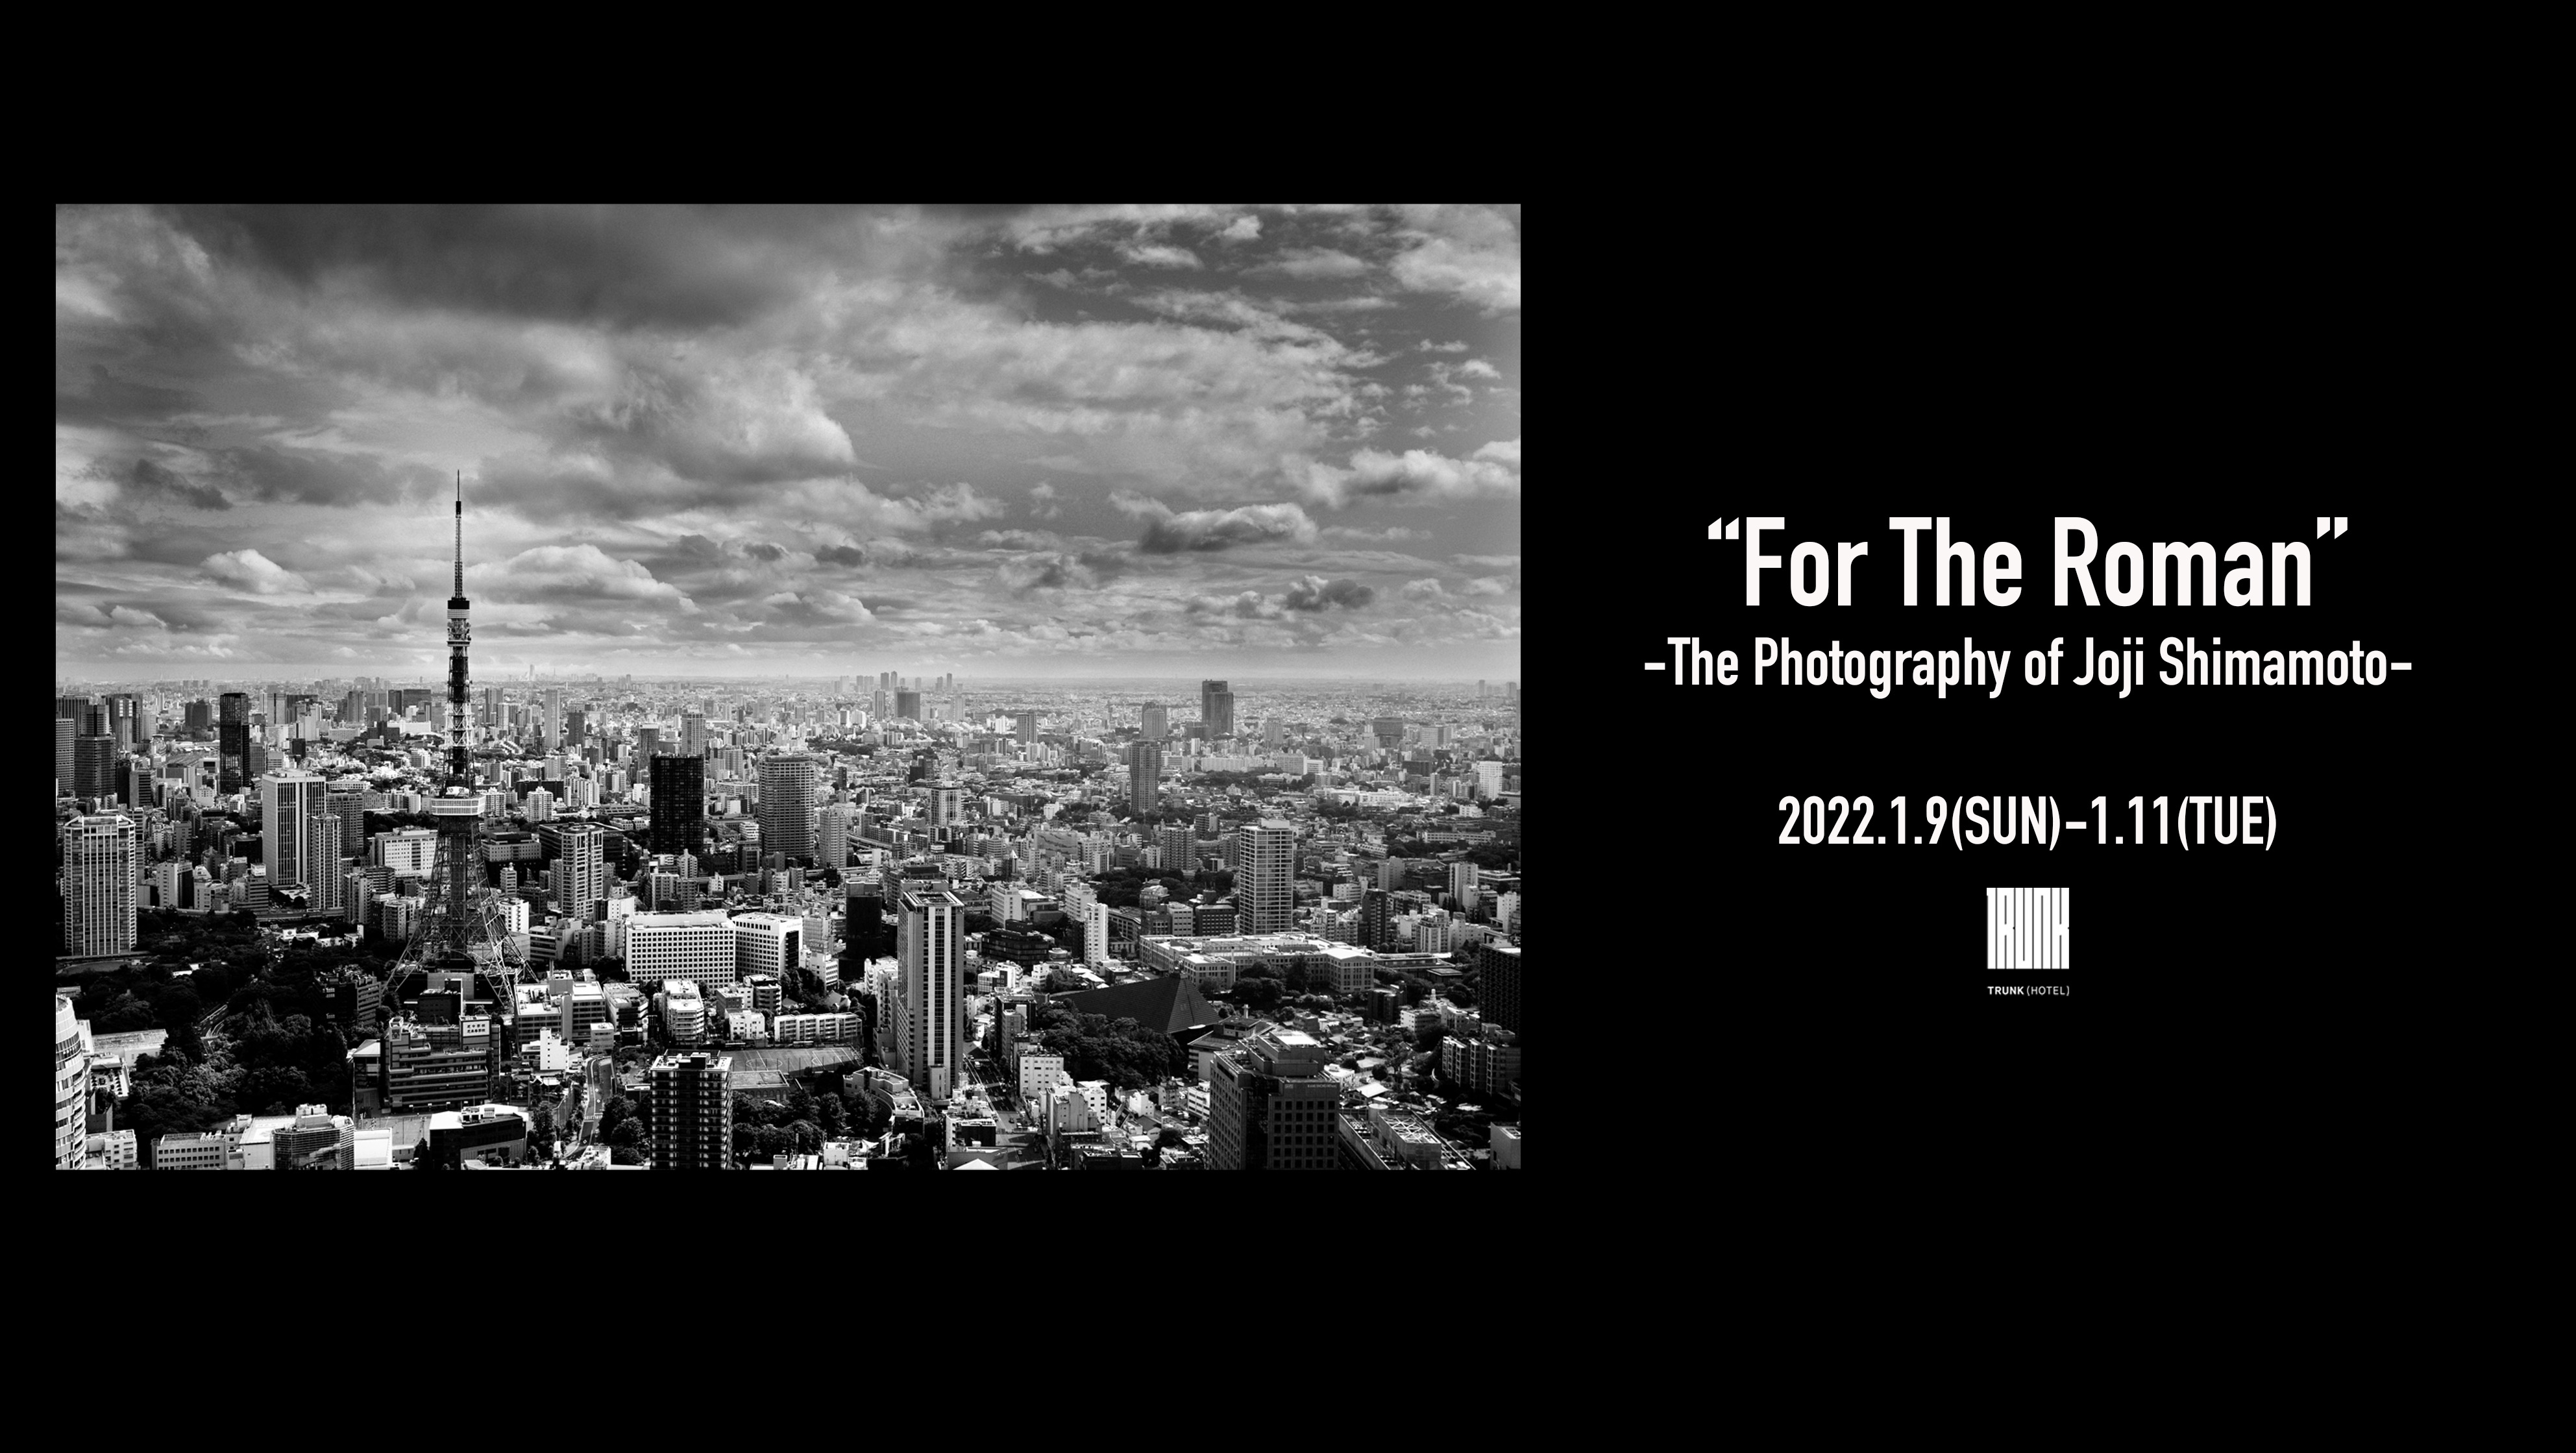 For The Roman -The Photography of Joji Shimamoto